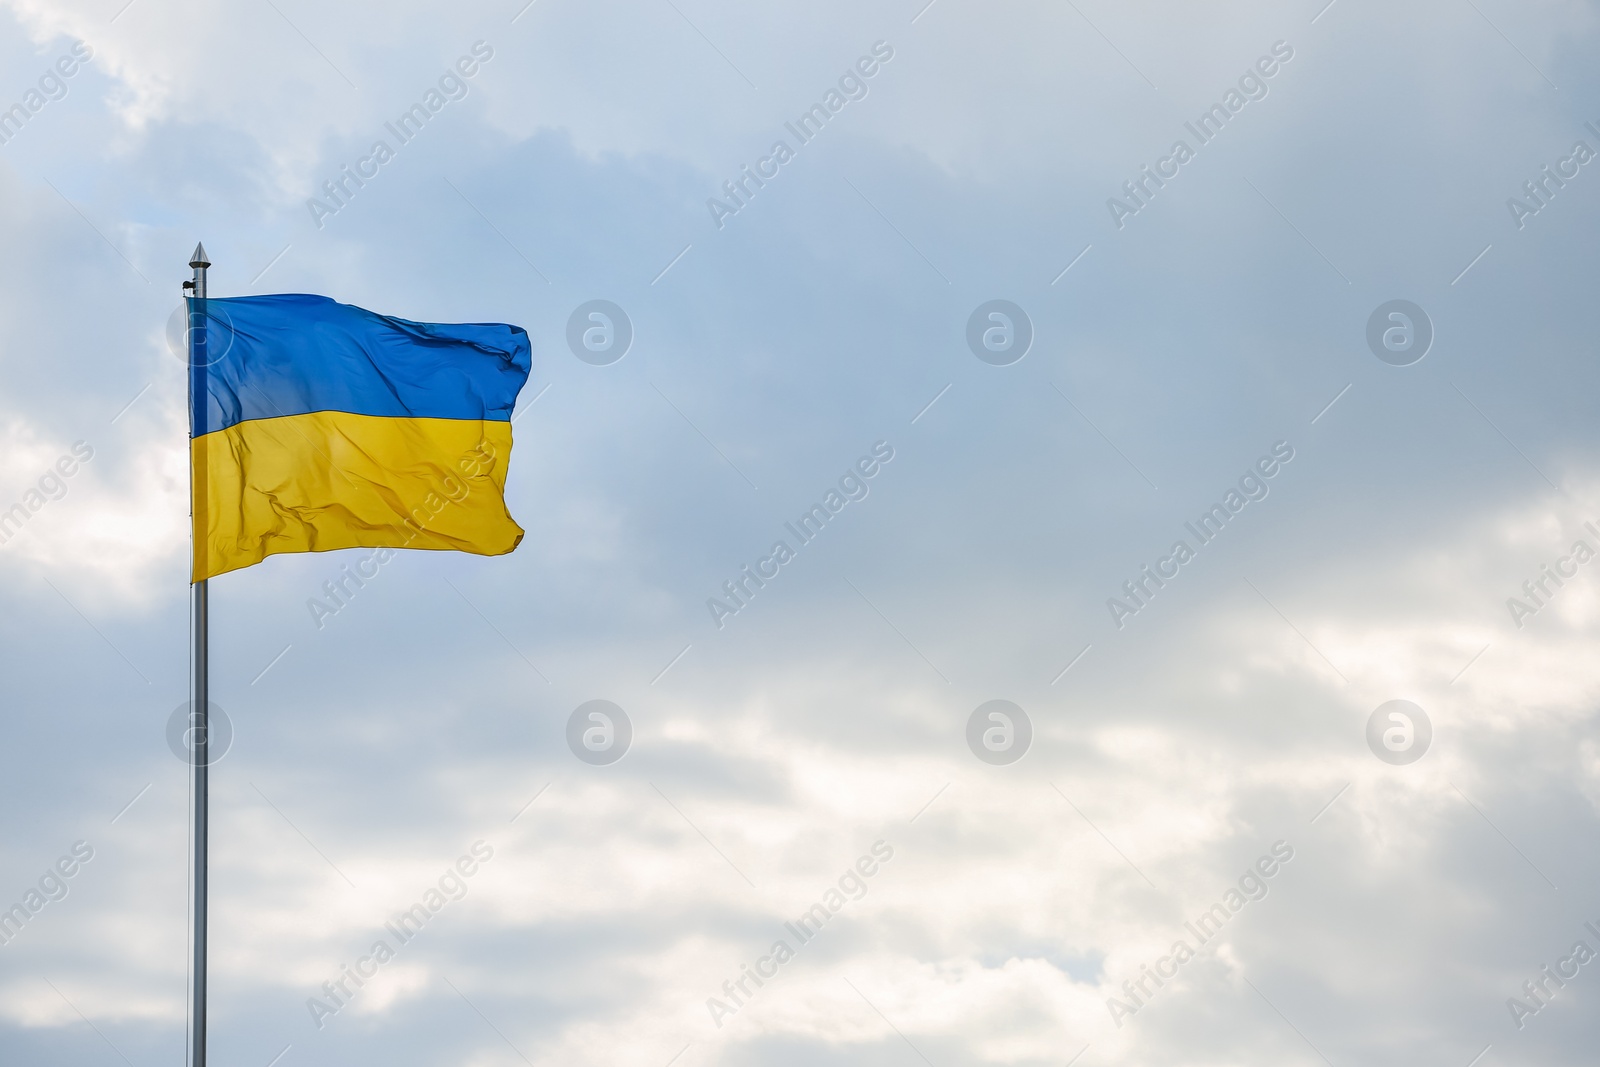 Photo of National flag of Ukraine against cloudy sky